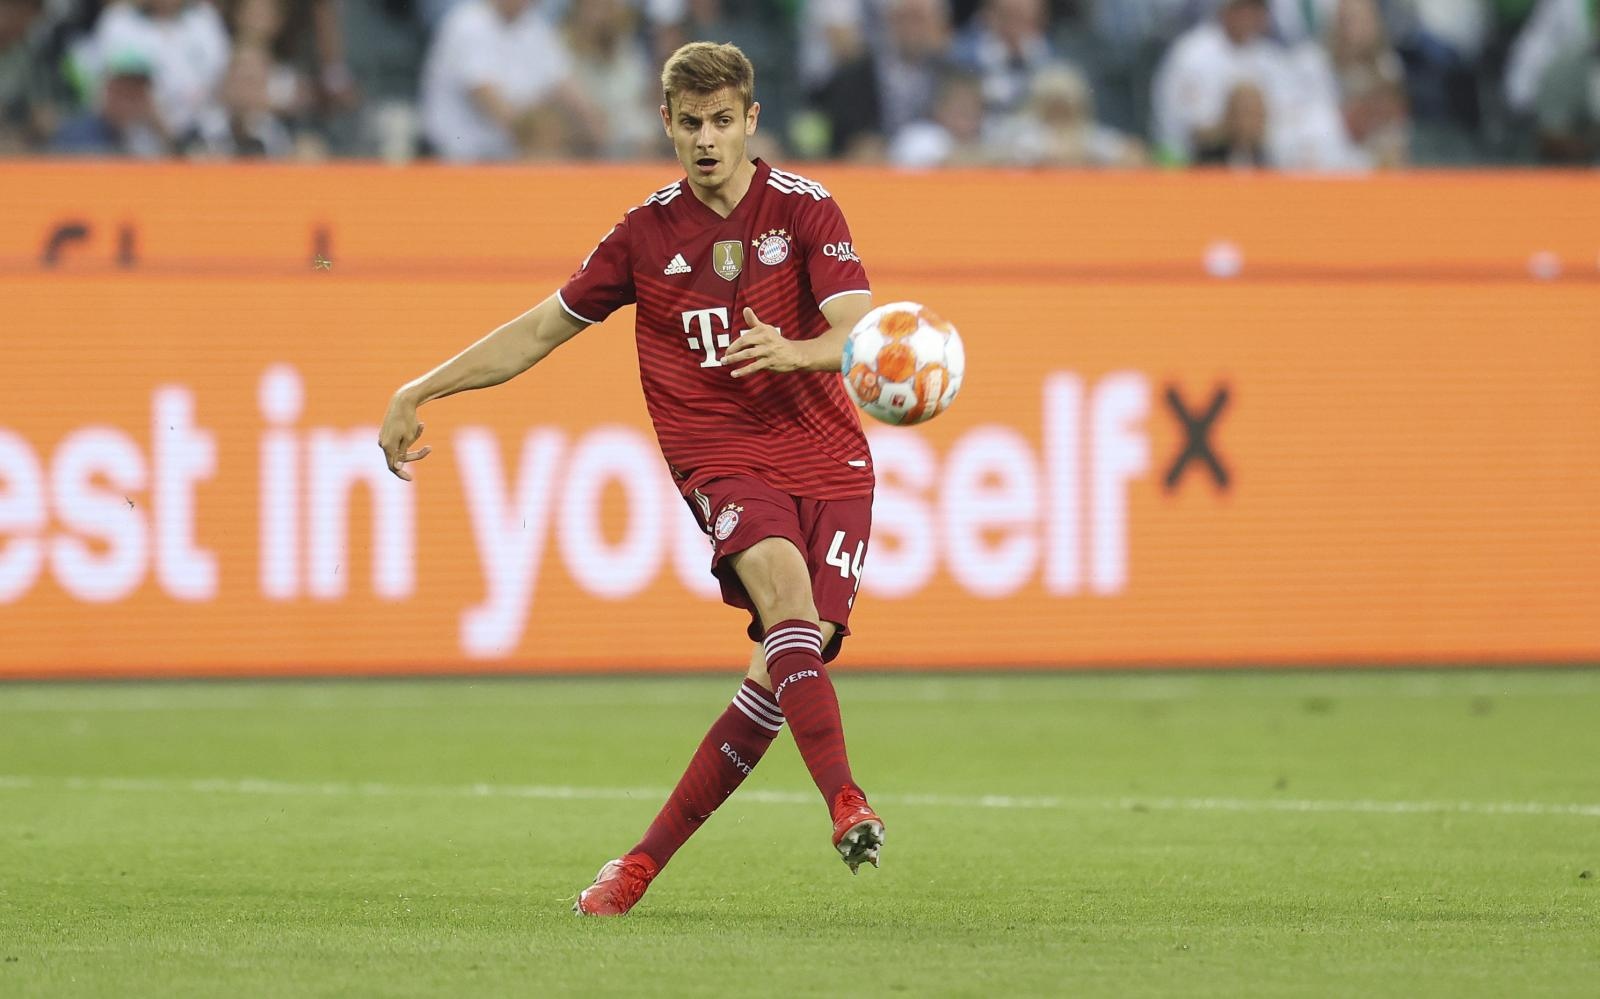 Young Croatian defender Josip Stanišić signs with Bayern Munich until 2025